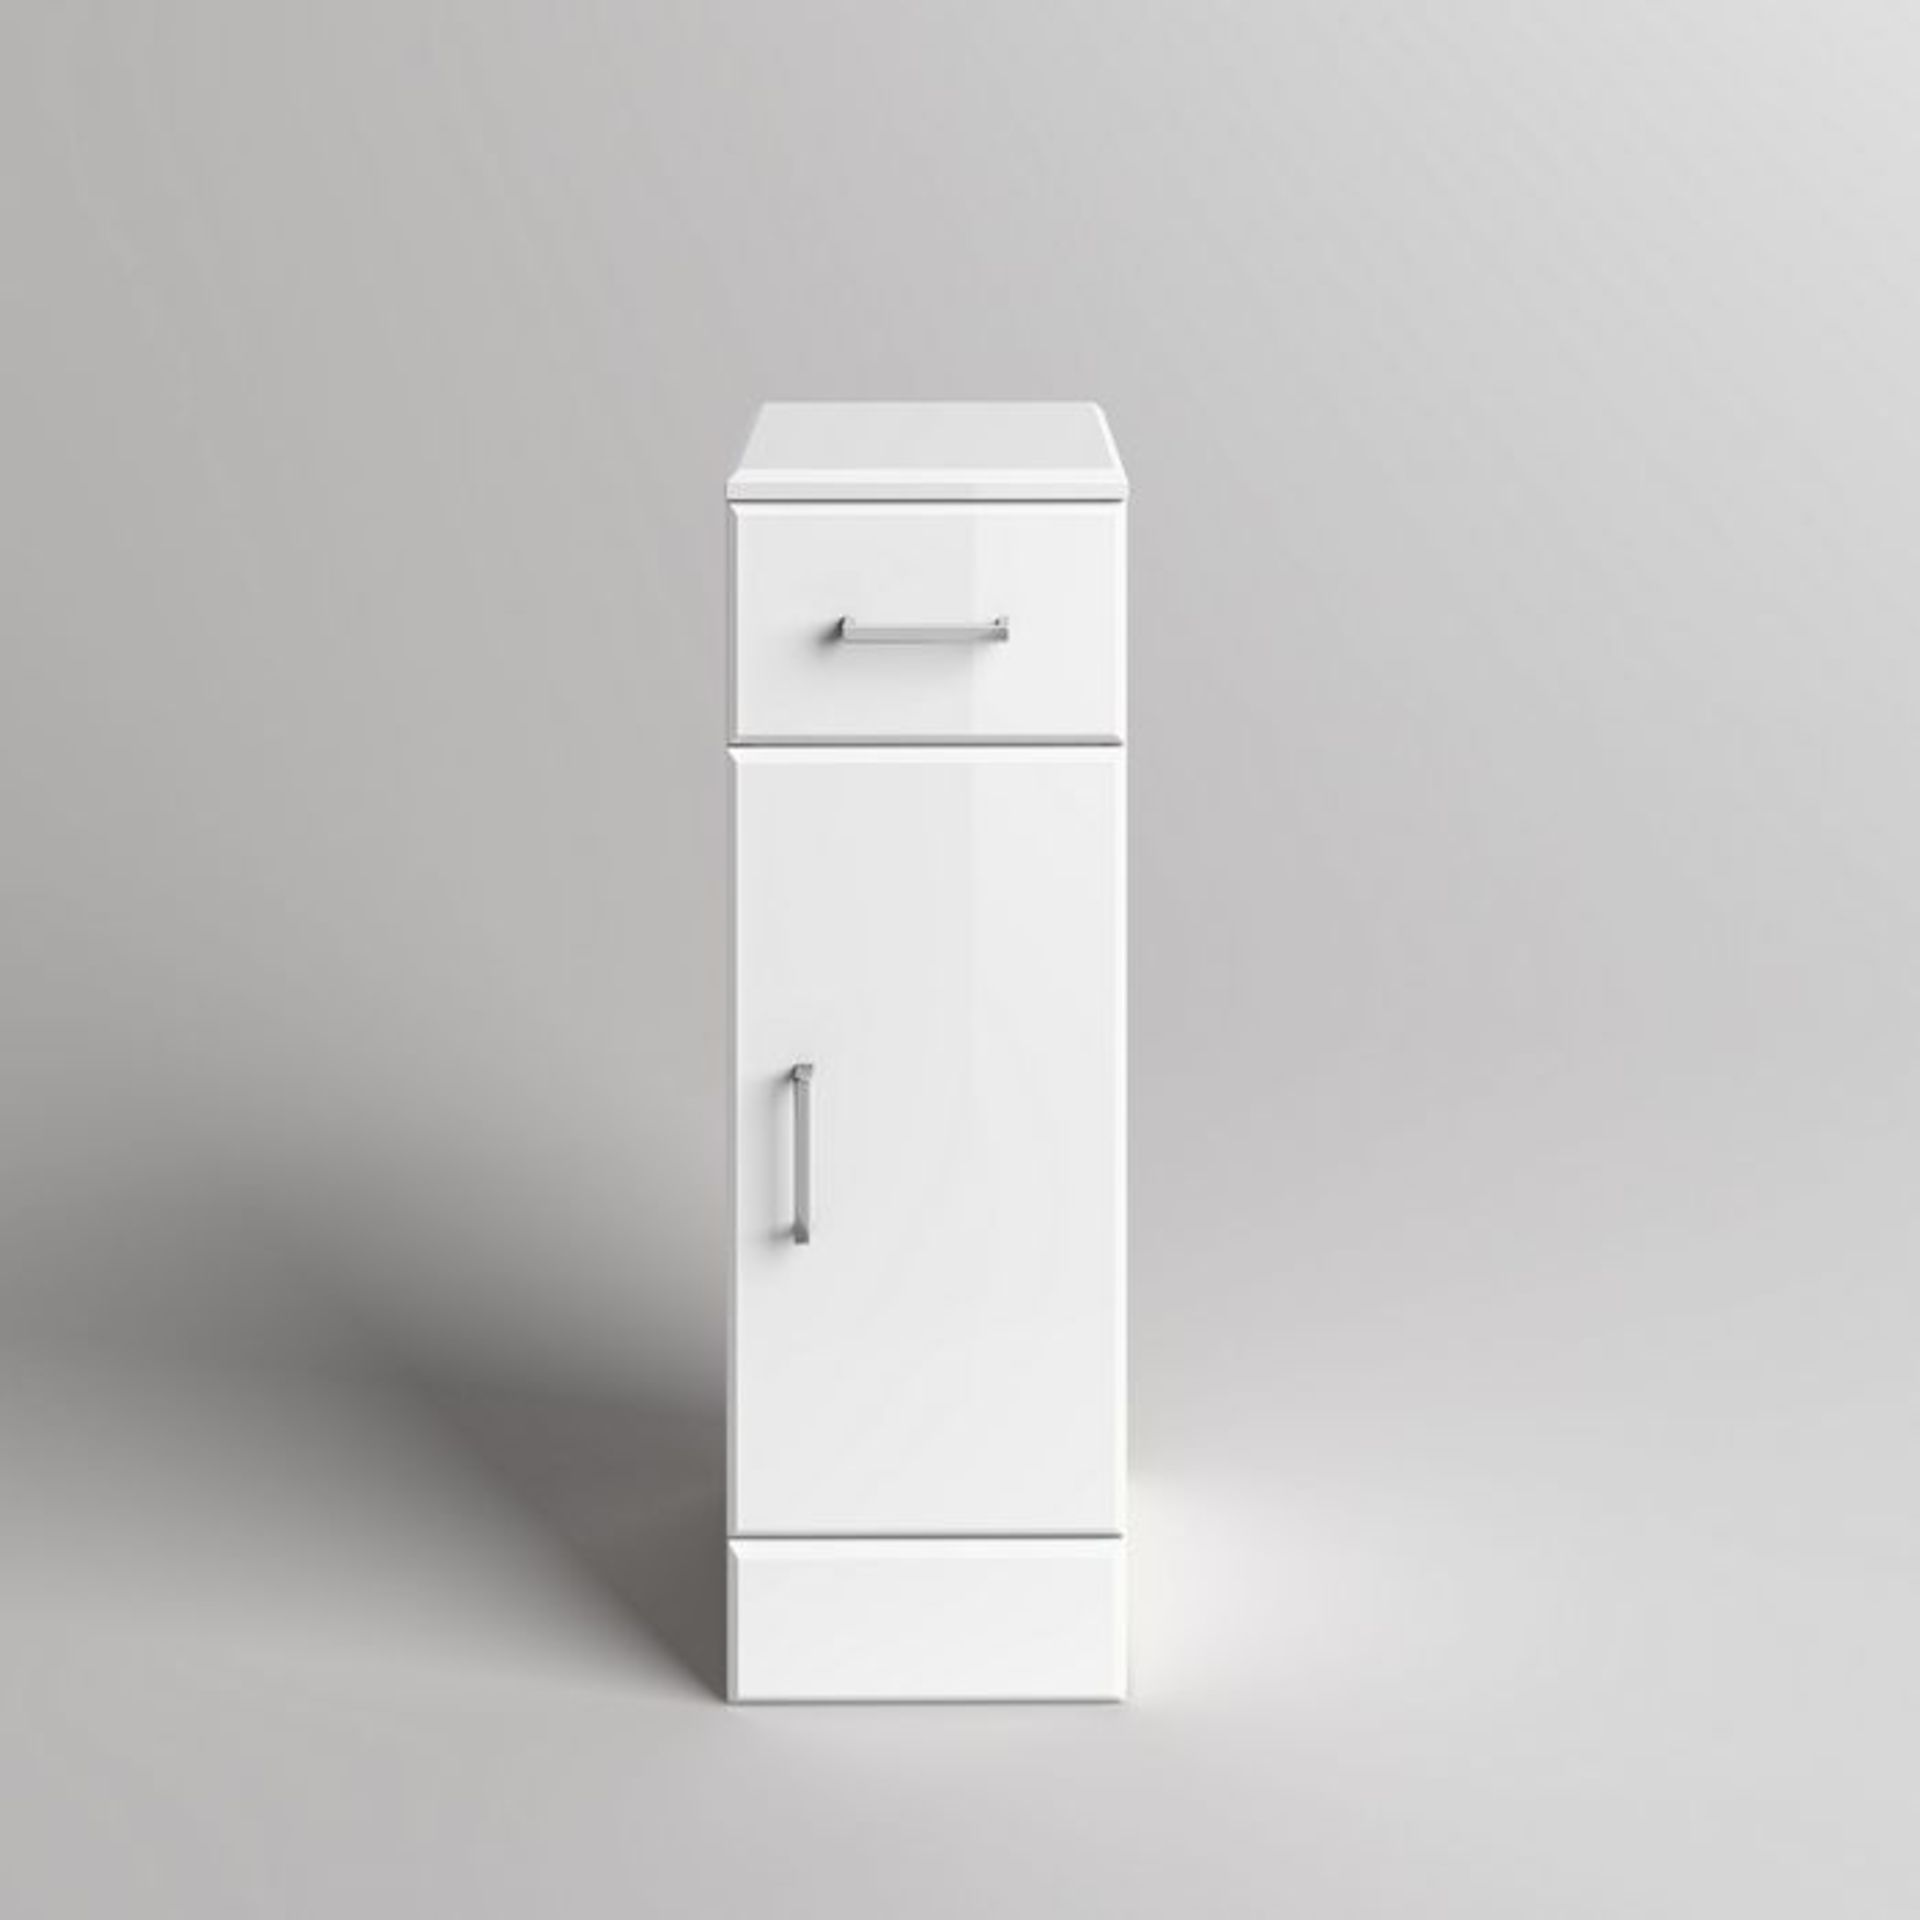 (H173) 250x300mm Quartz Gloss White Small Side Cabinet Unit. RRP £143.99. Pristine gloss white - Image 6 of 8